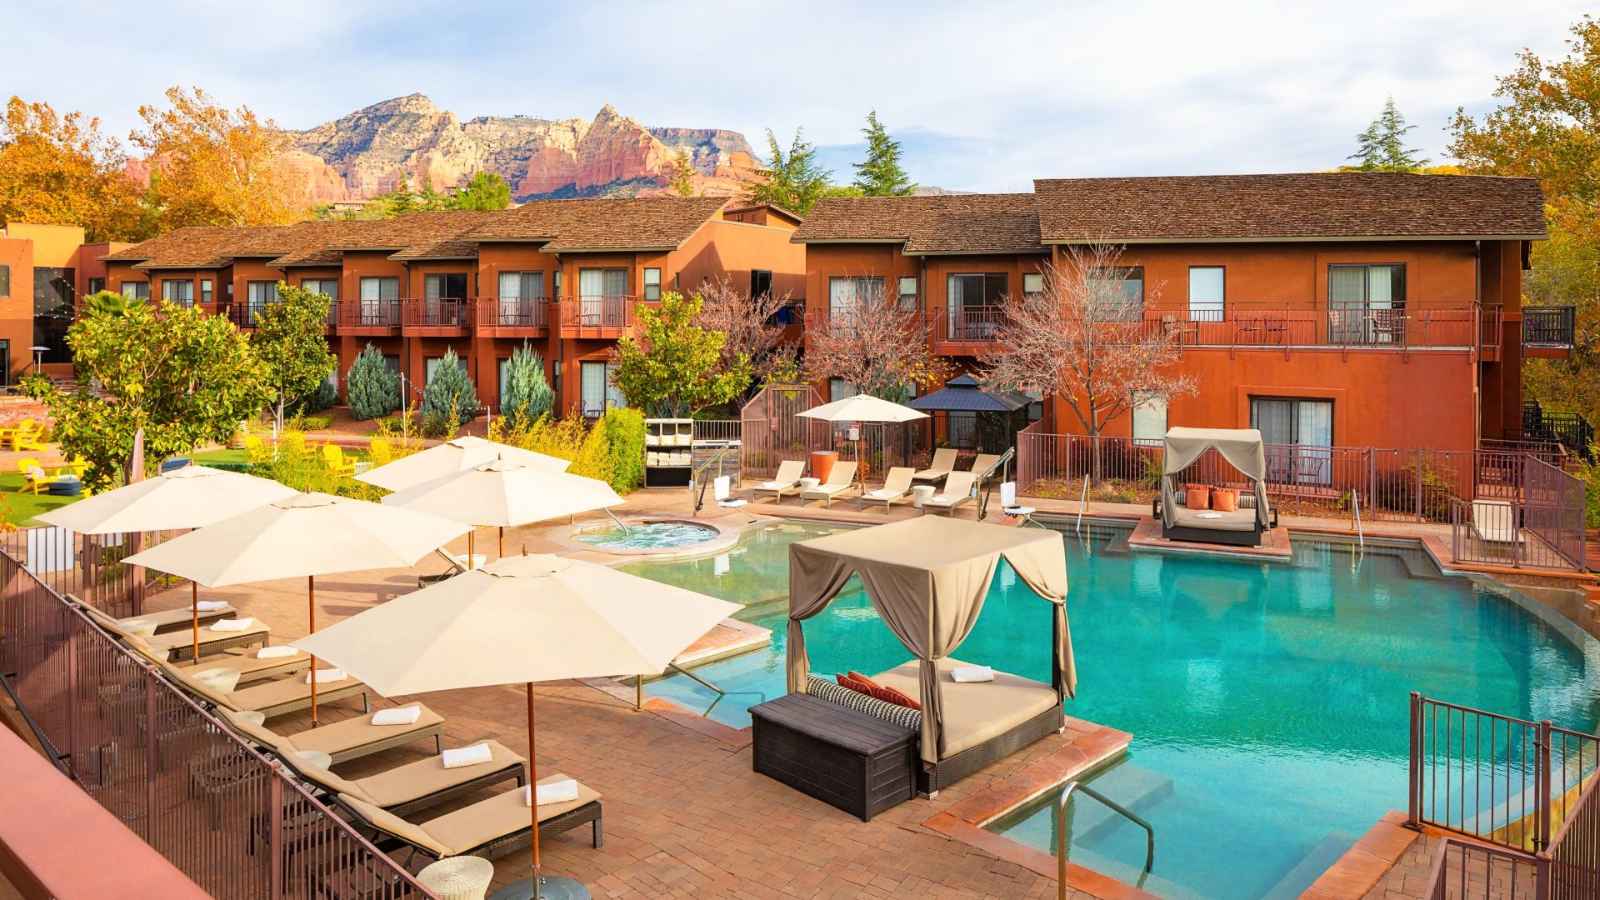 Best Hotels in Sedona Amara Resort and Spa